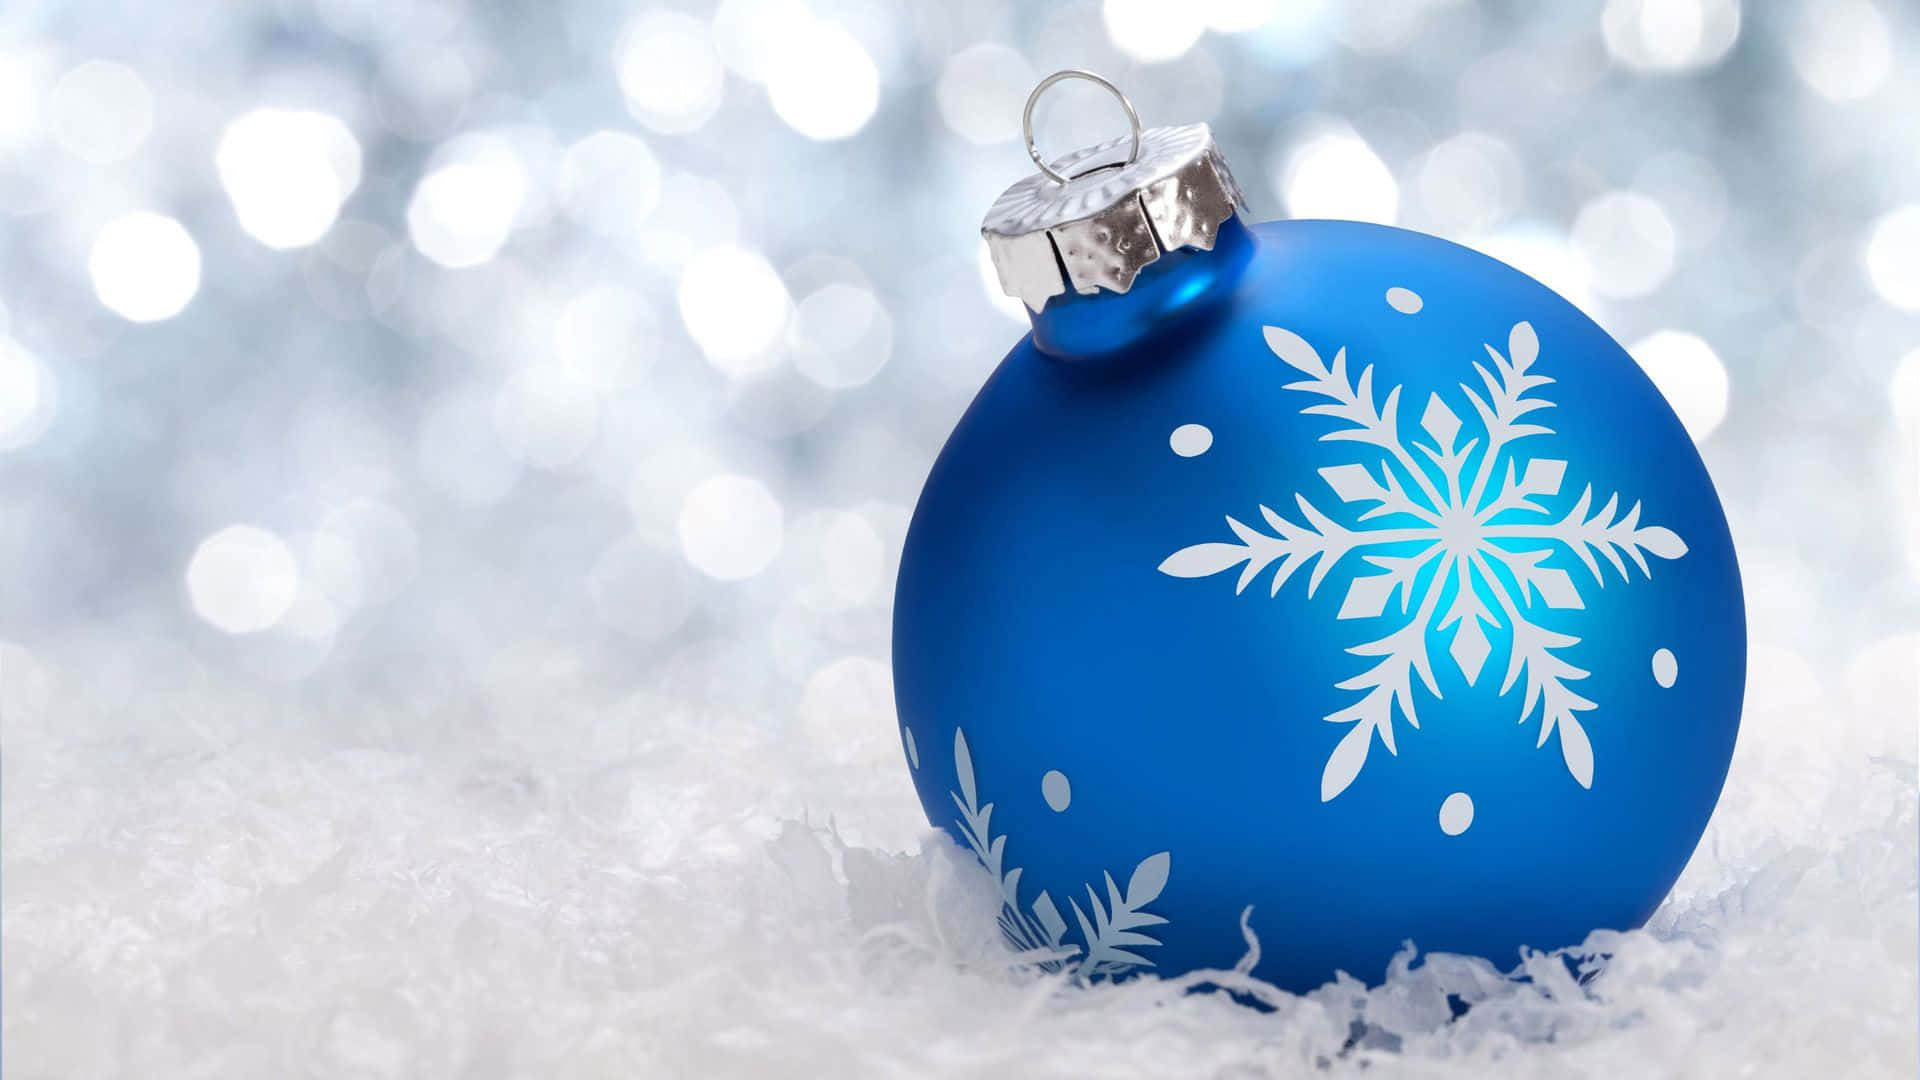 Enblå Julgransboll Med Snöflingor På Det Wallpaper